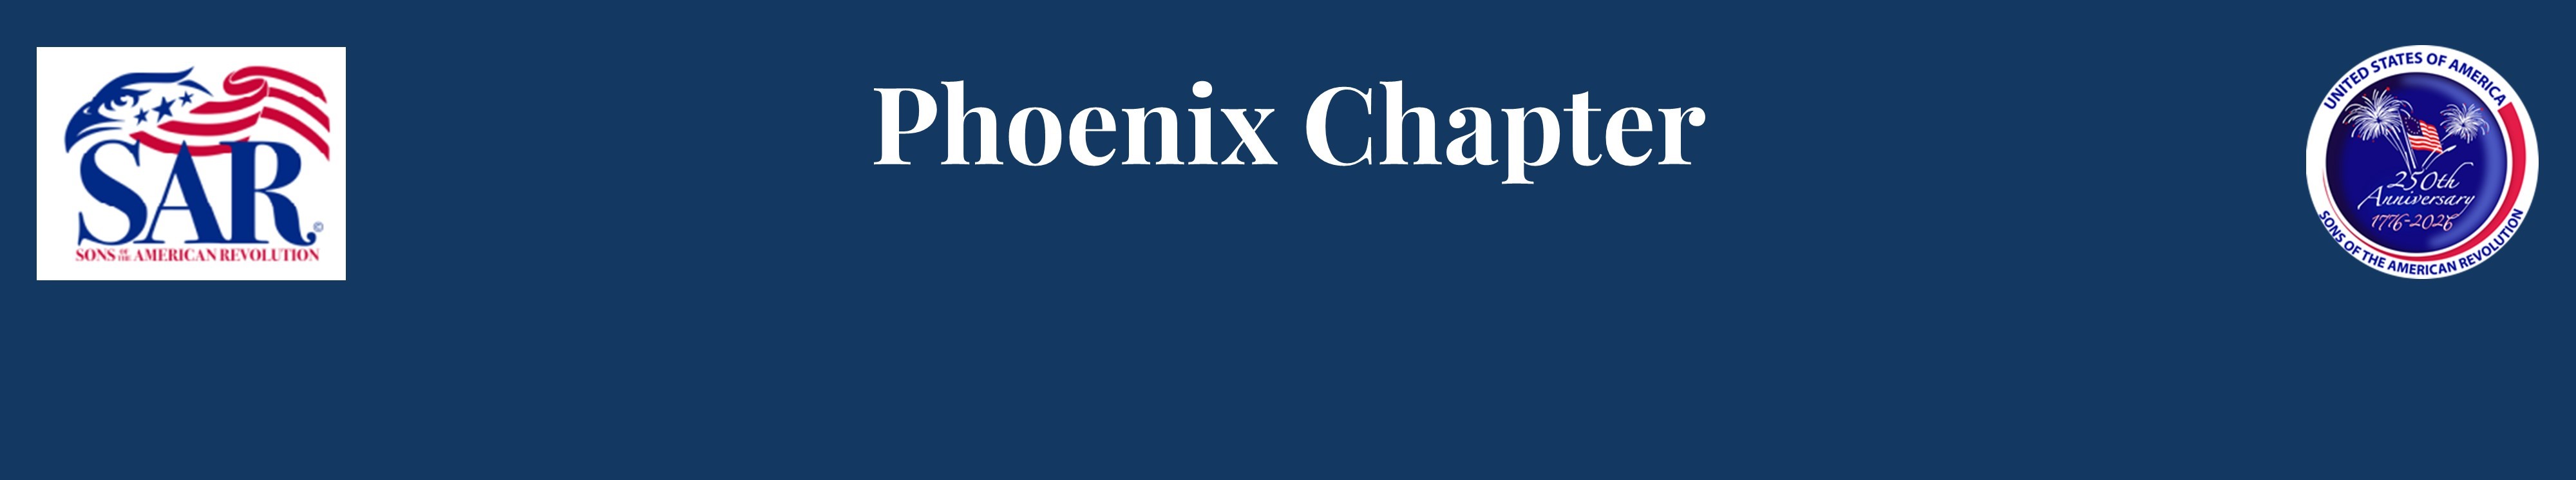 Phoenix Chapter Banner